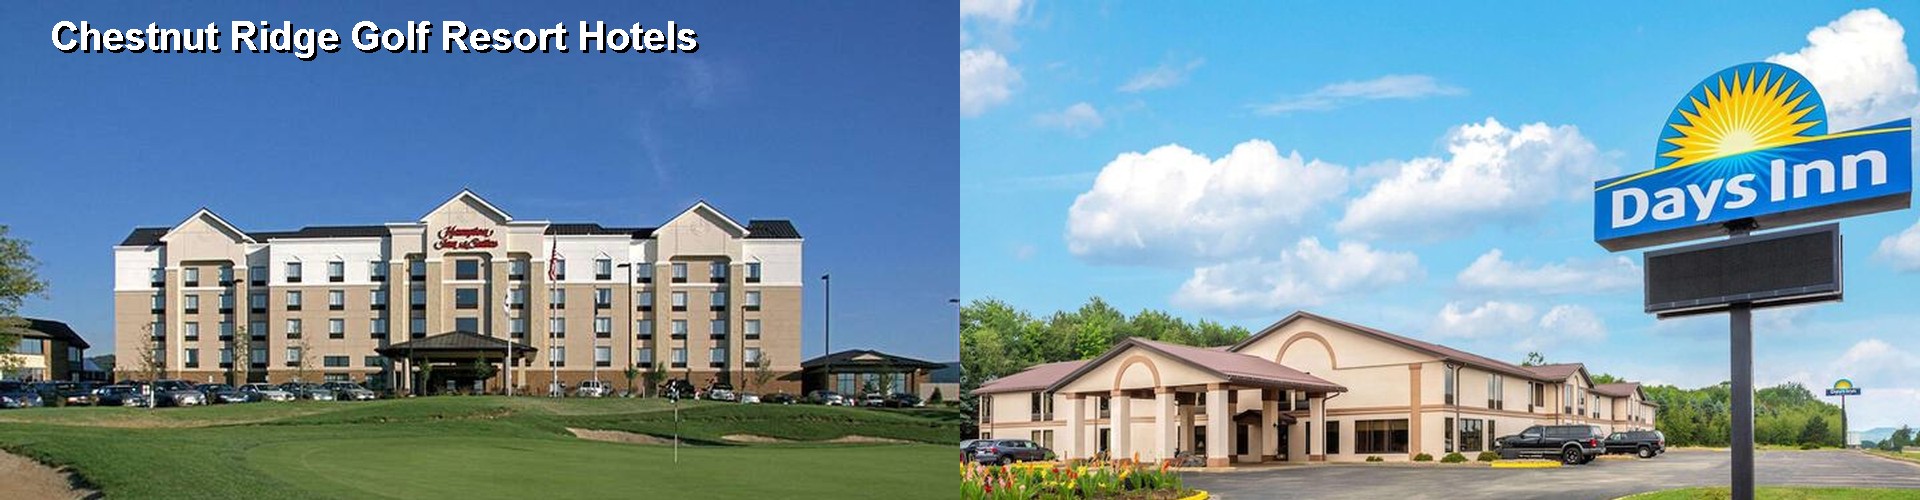 5 Best Hotels near Chestnut Ridge Golf Resort